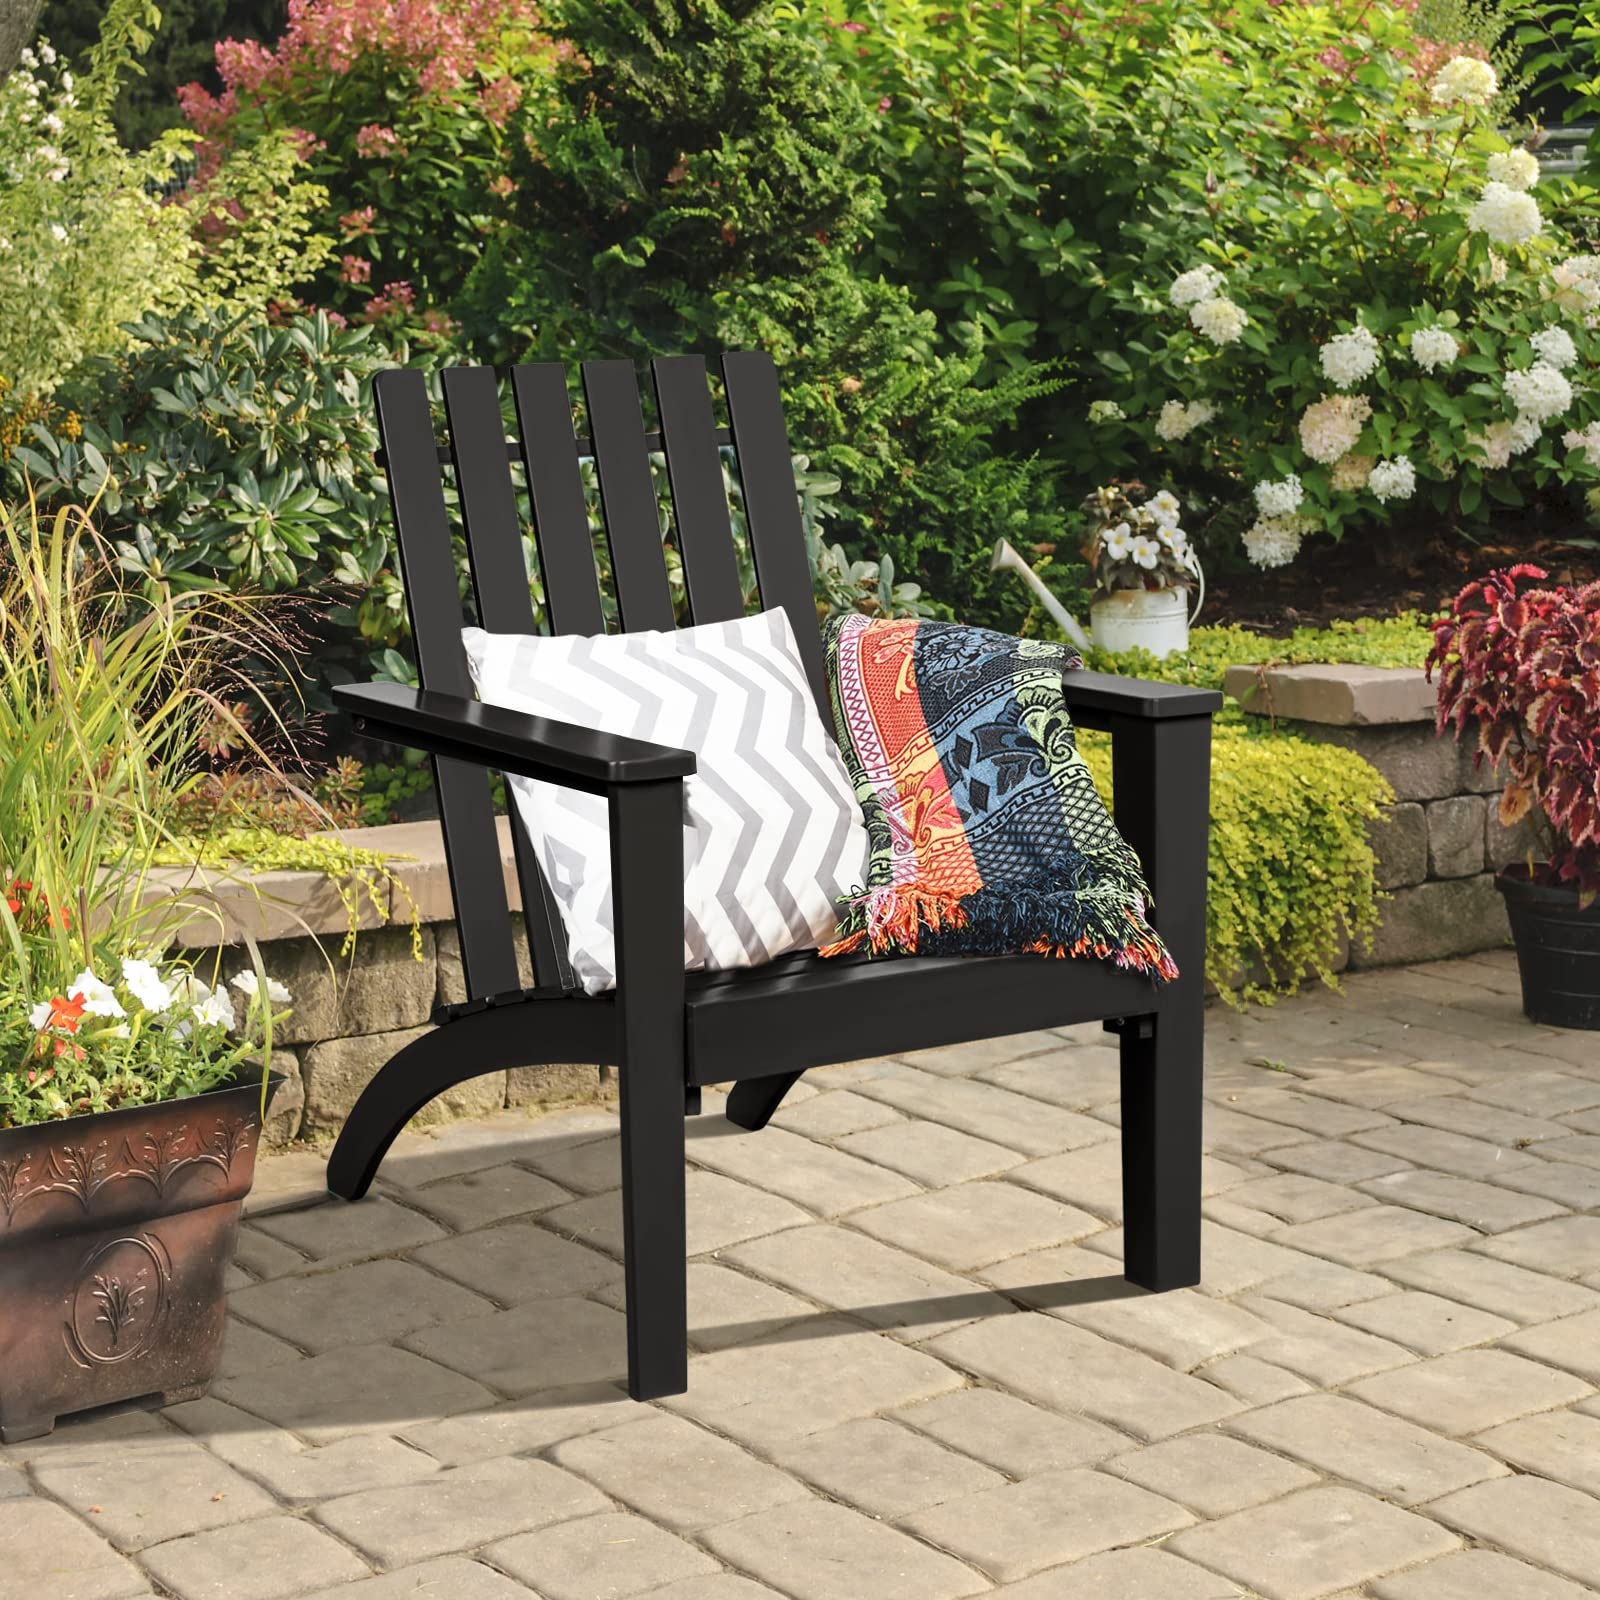 Giantex Wooden Adirondack Chair W/Ergonomic Design Outdoor Chair for Yard